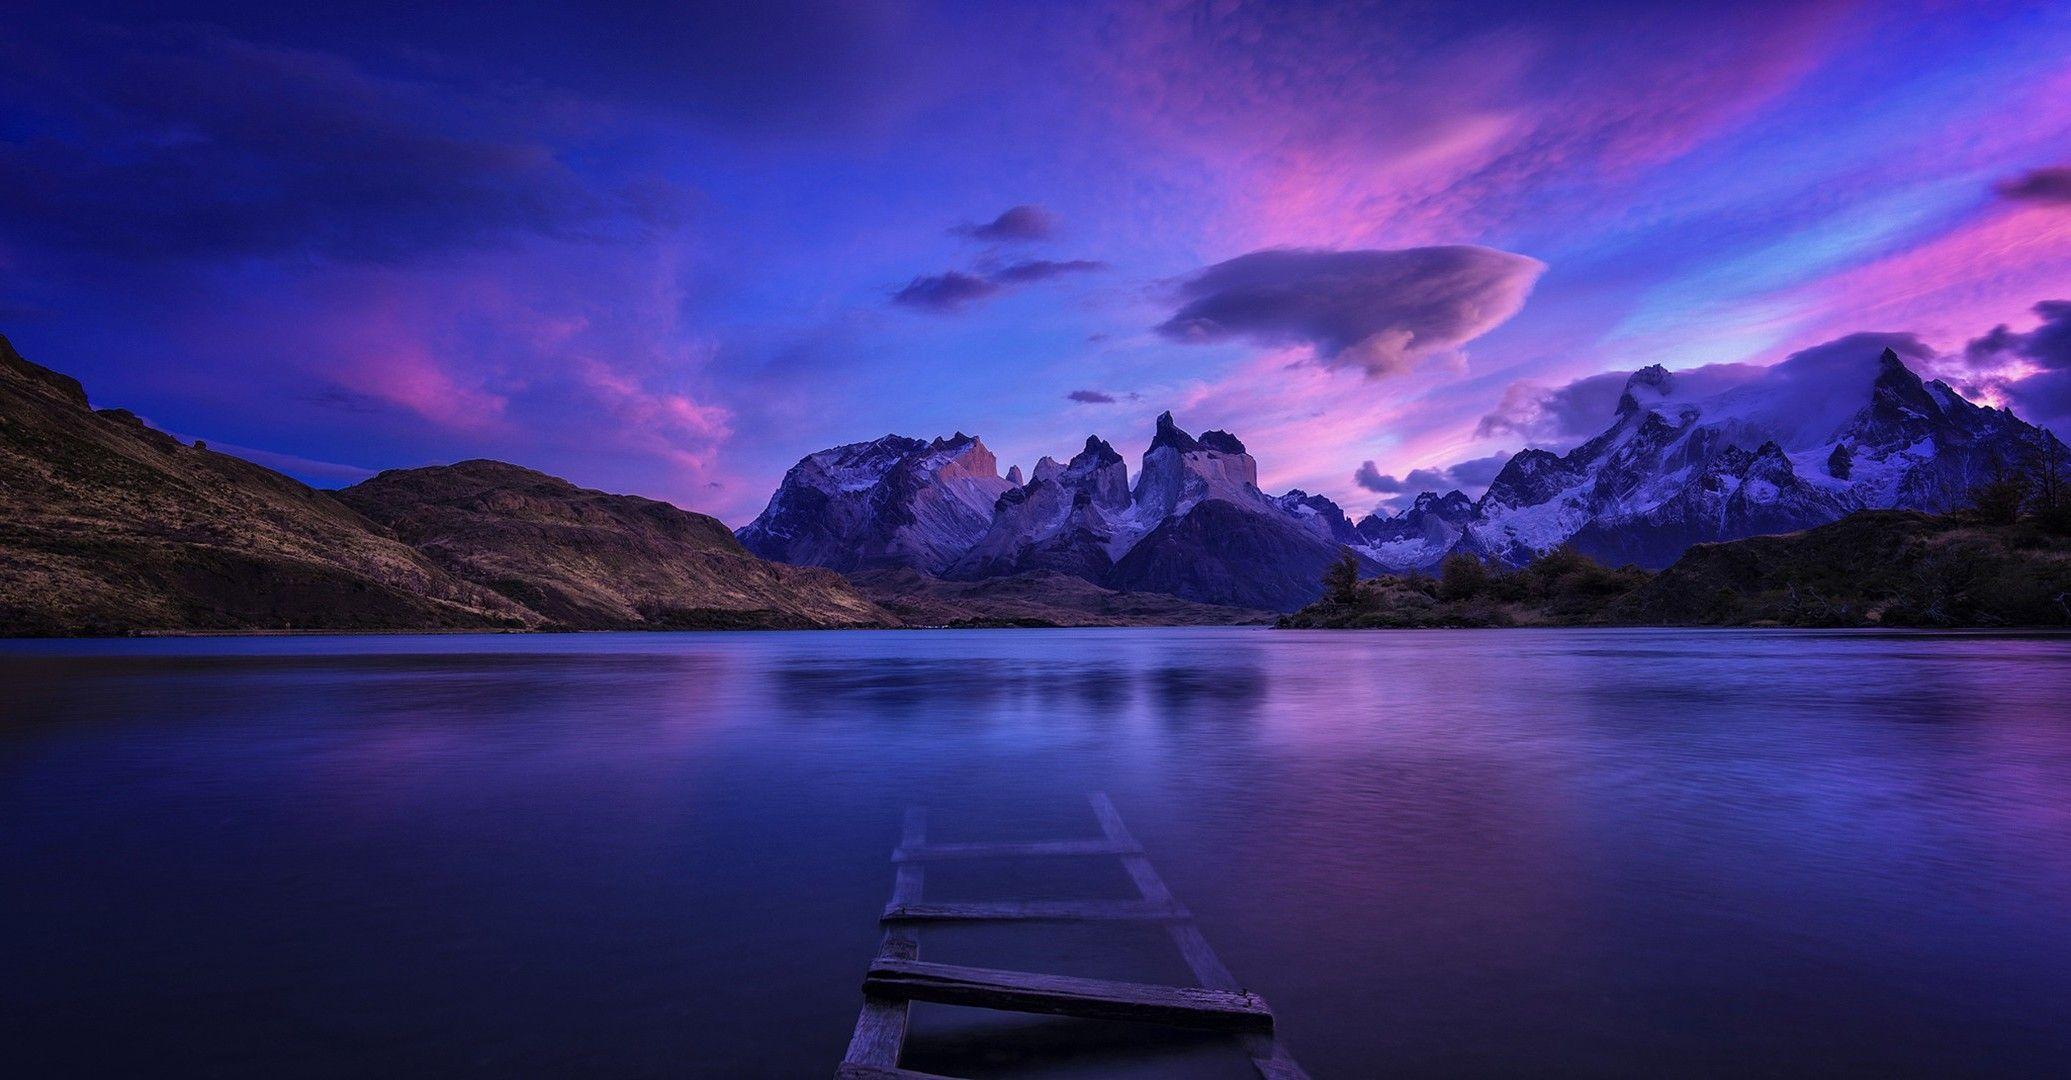 Patagonia 4K Wallpapers - Top Free Patagonia 4K Backgrounds ...